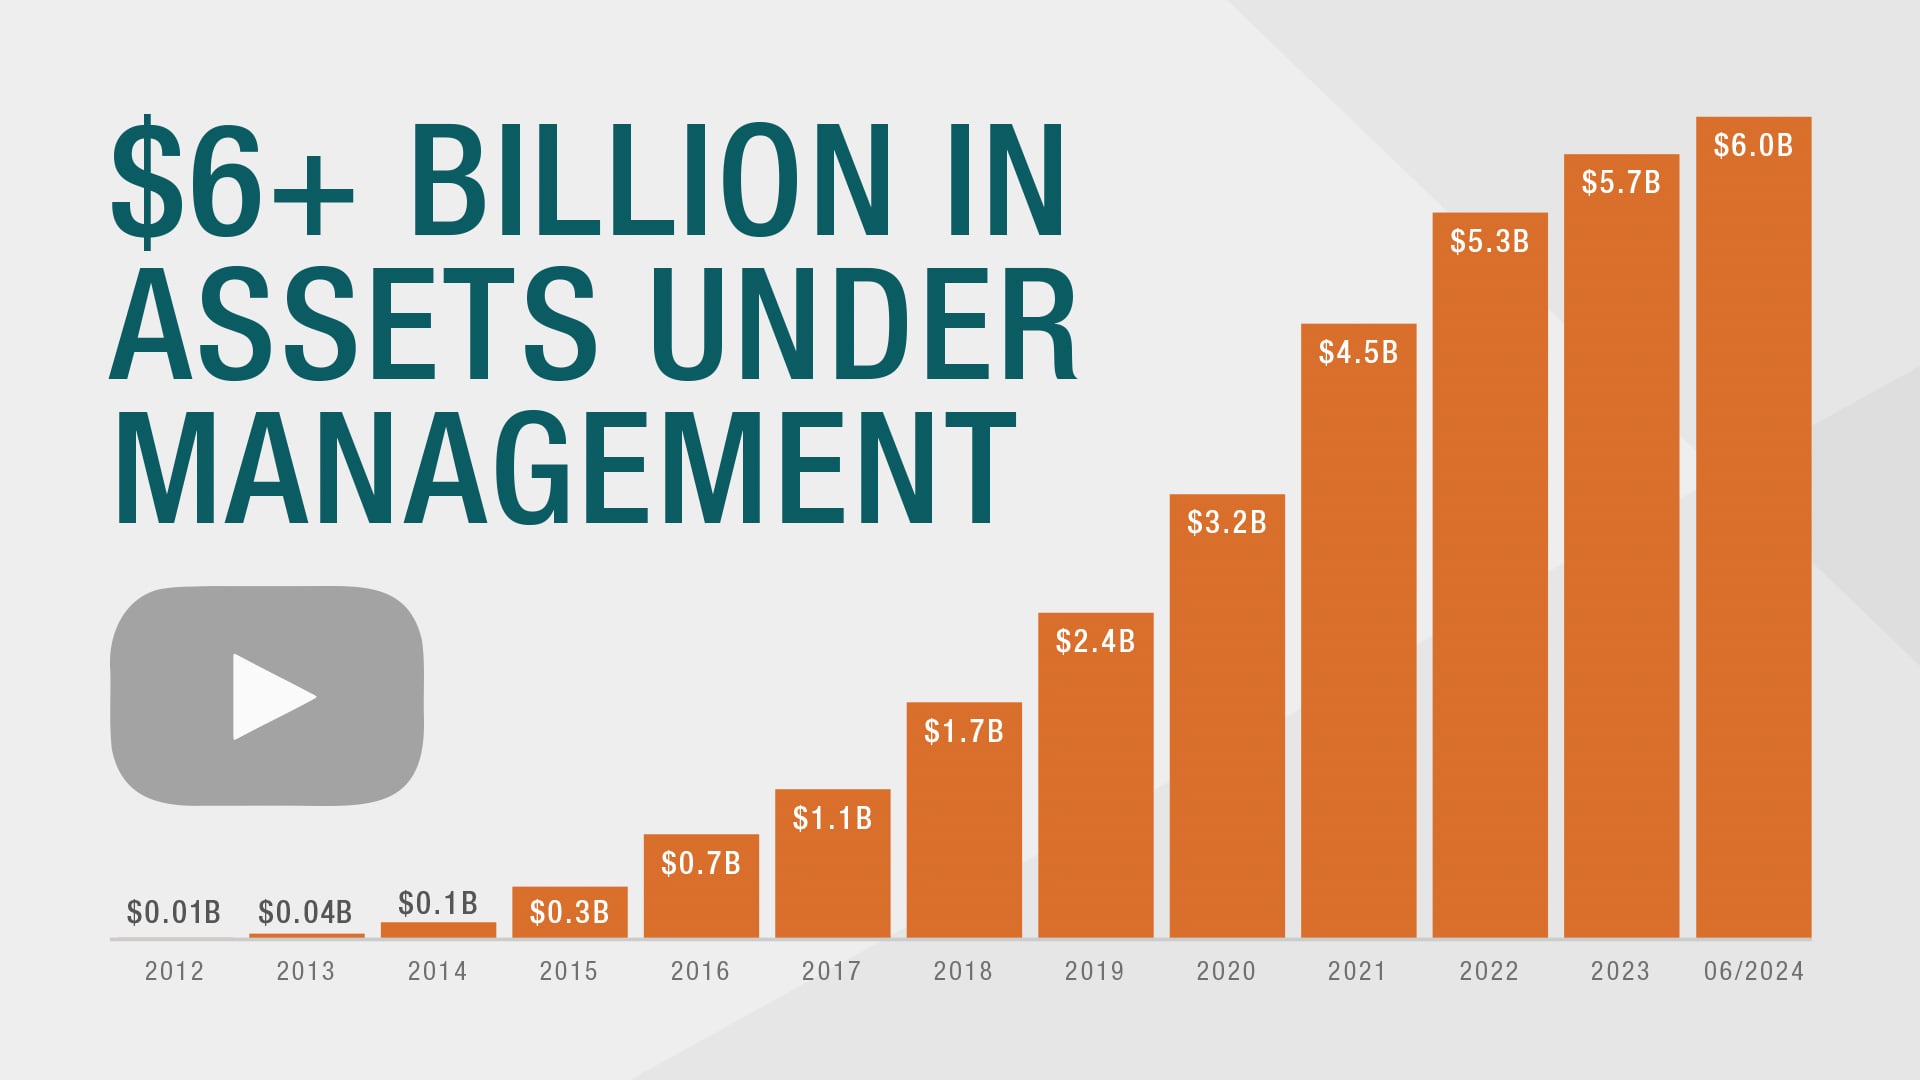 ExchangeRight Surpasses $6 Billion in Assets Managed on Behalf of Investors